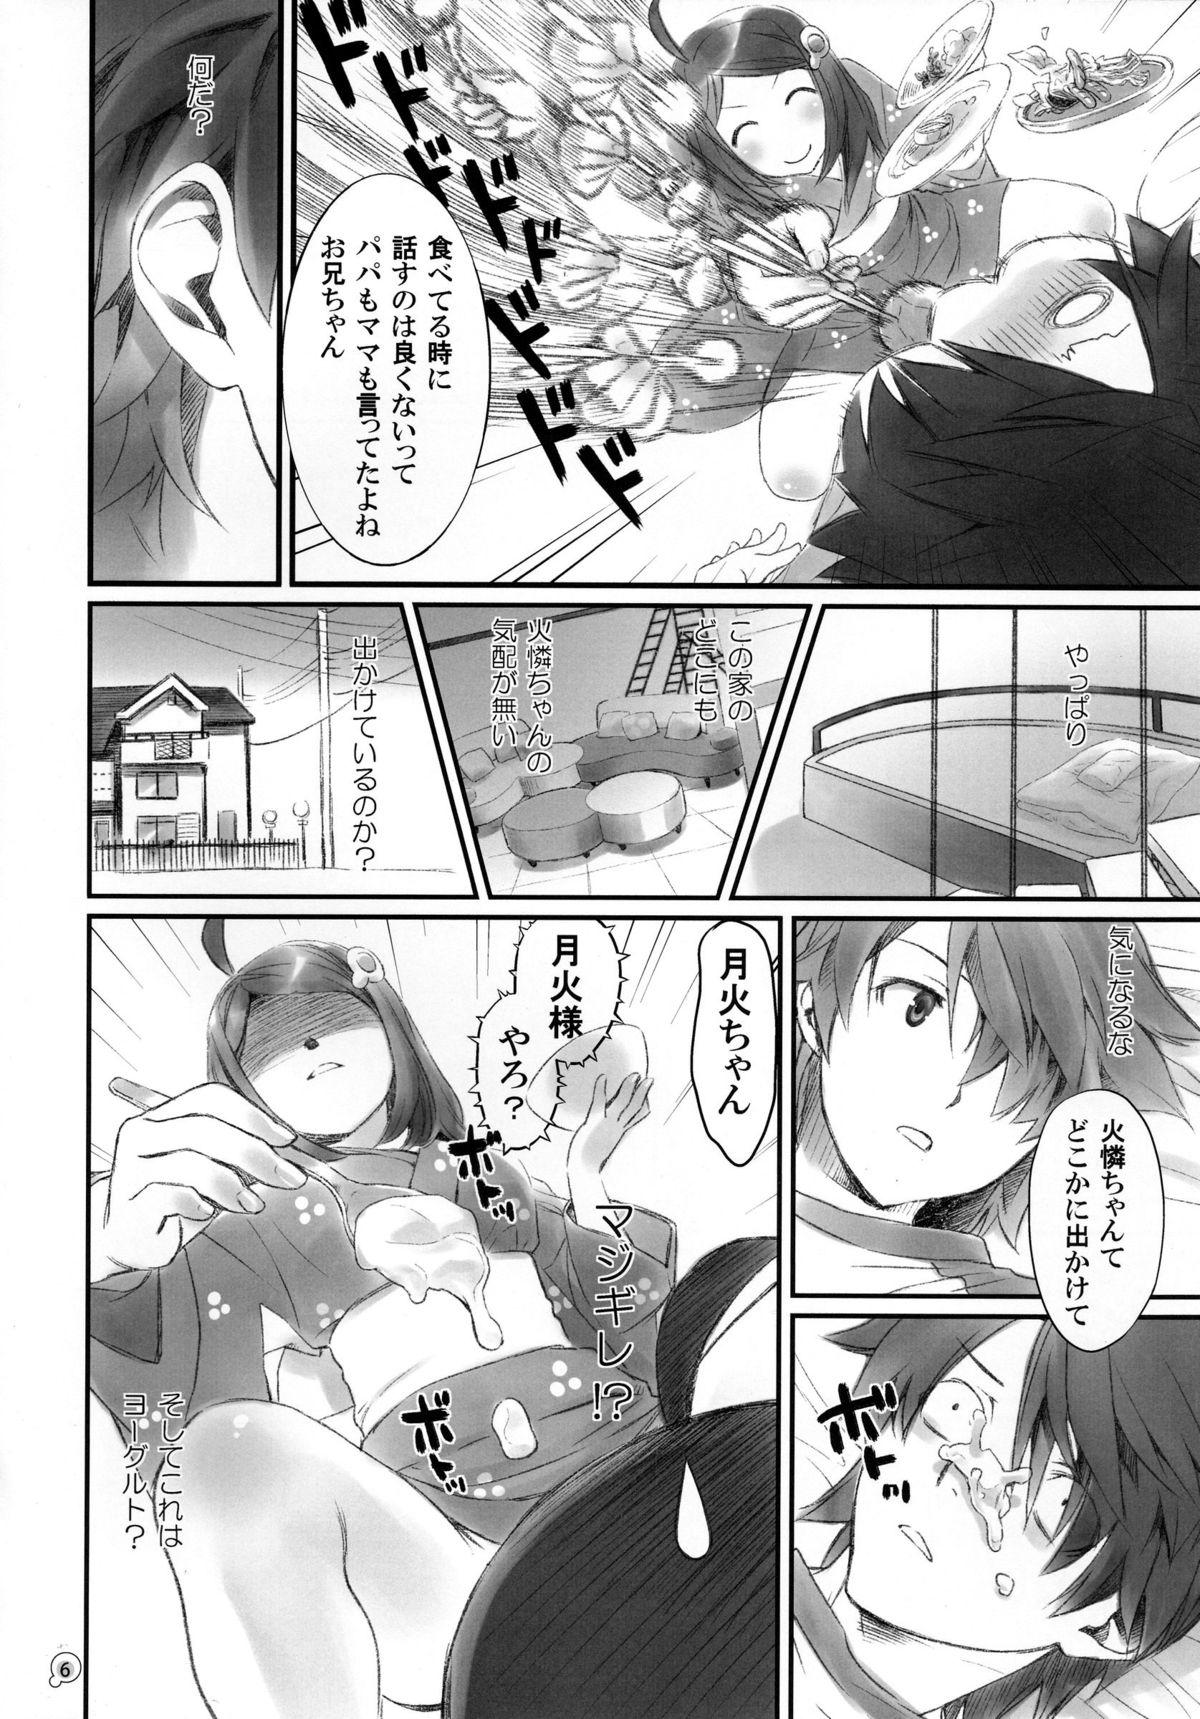 Gayclips Tsukihi Egg - Bakemonogatari Piercing - Page 6